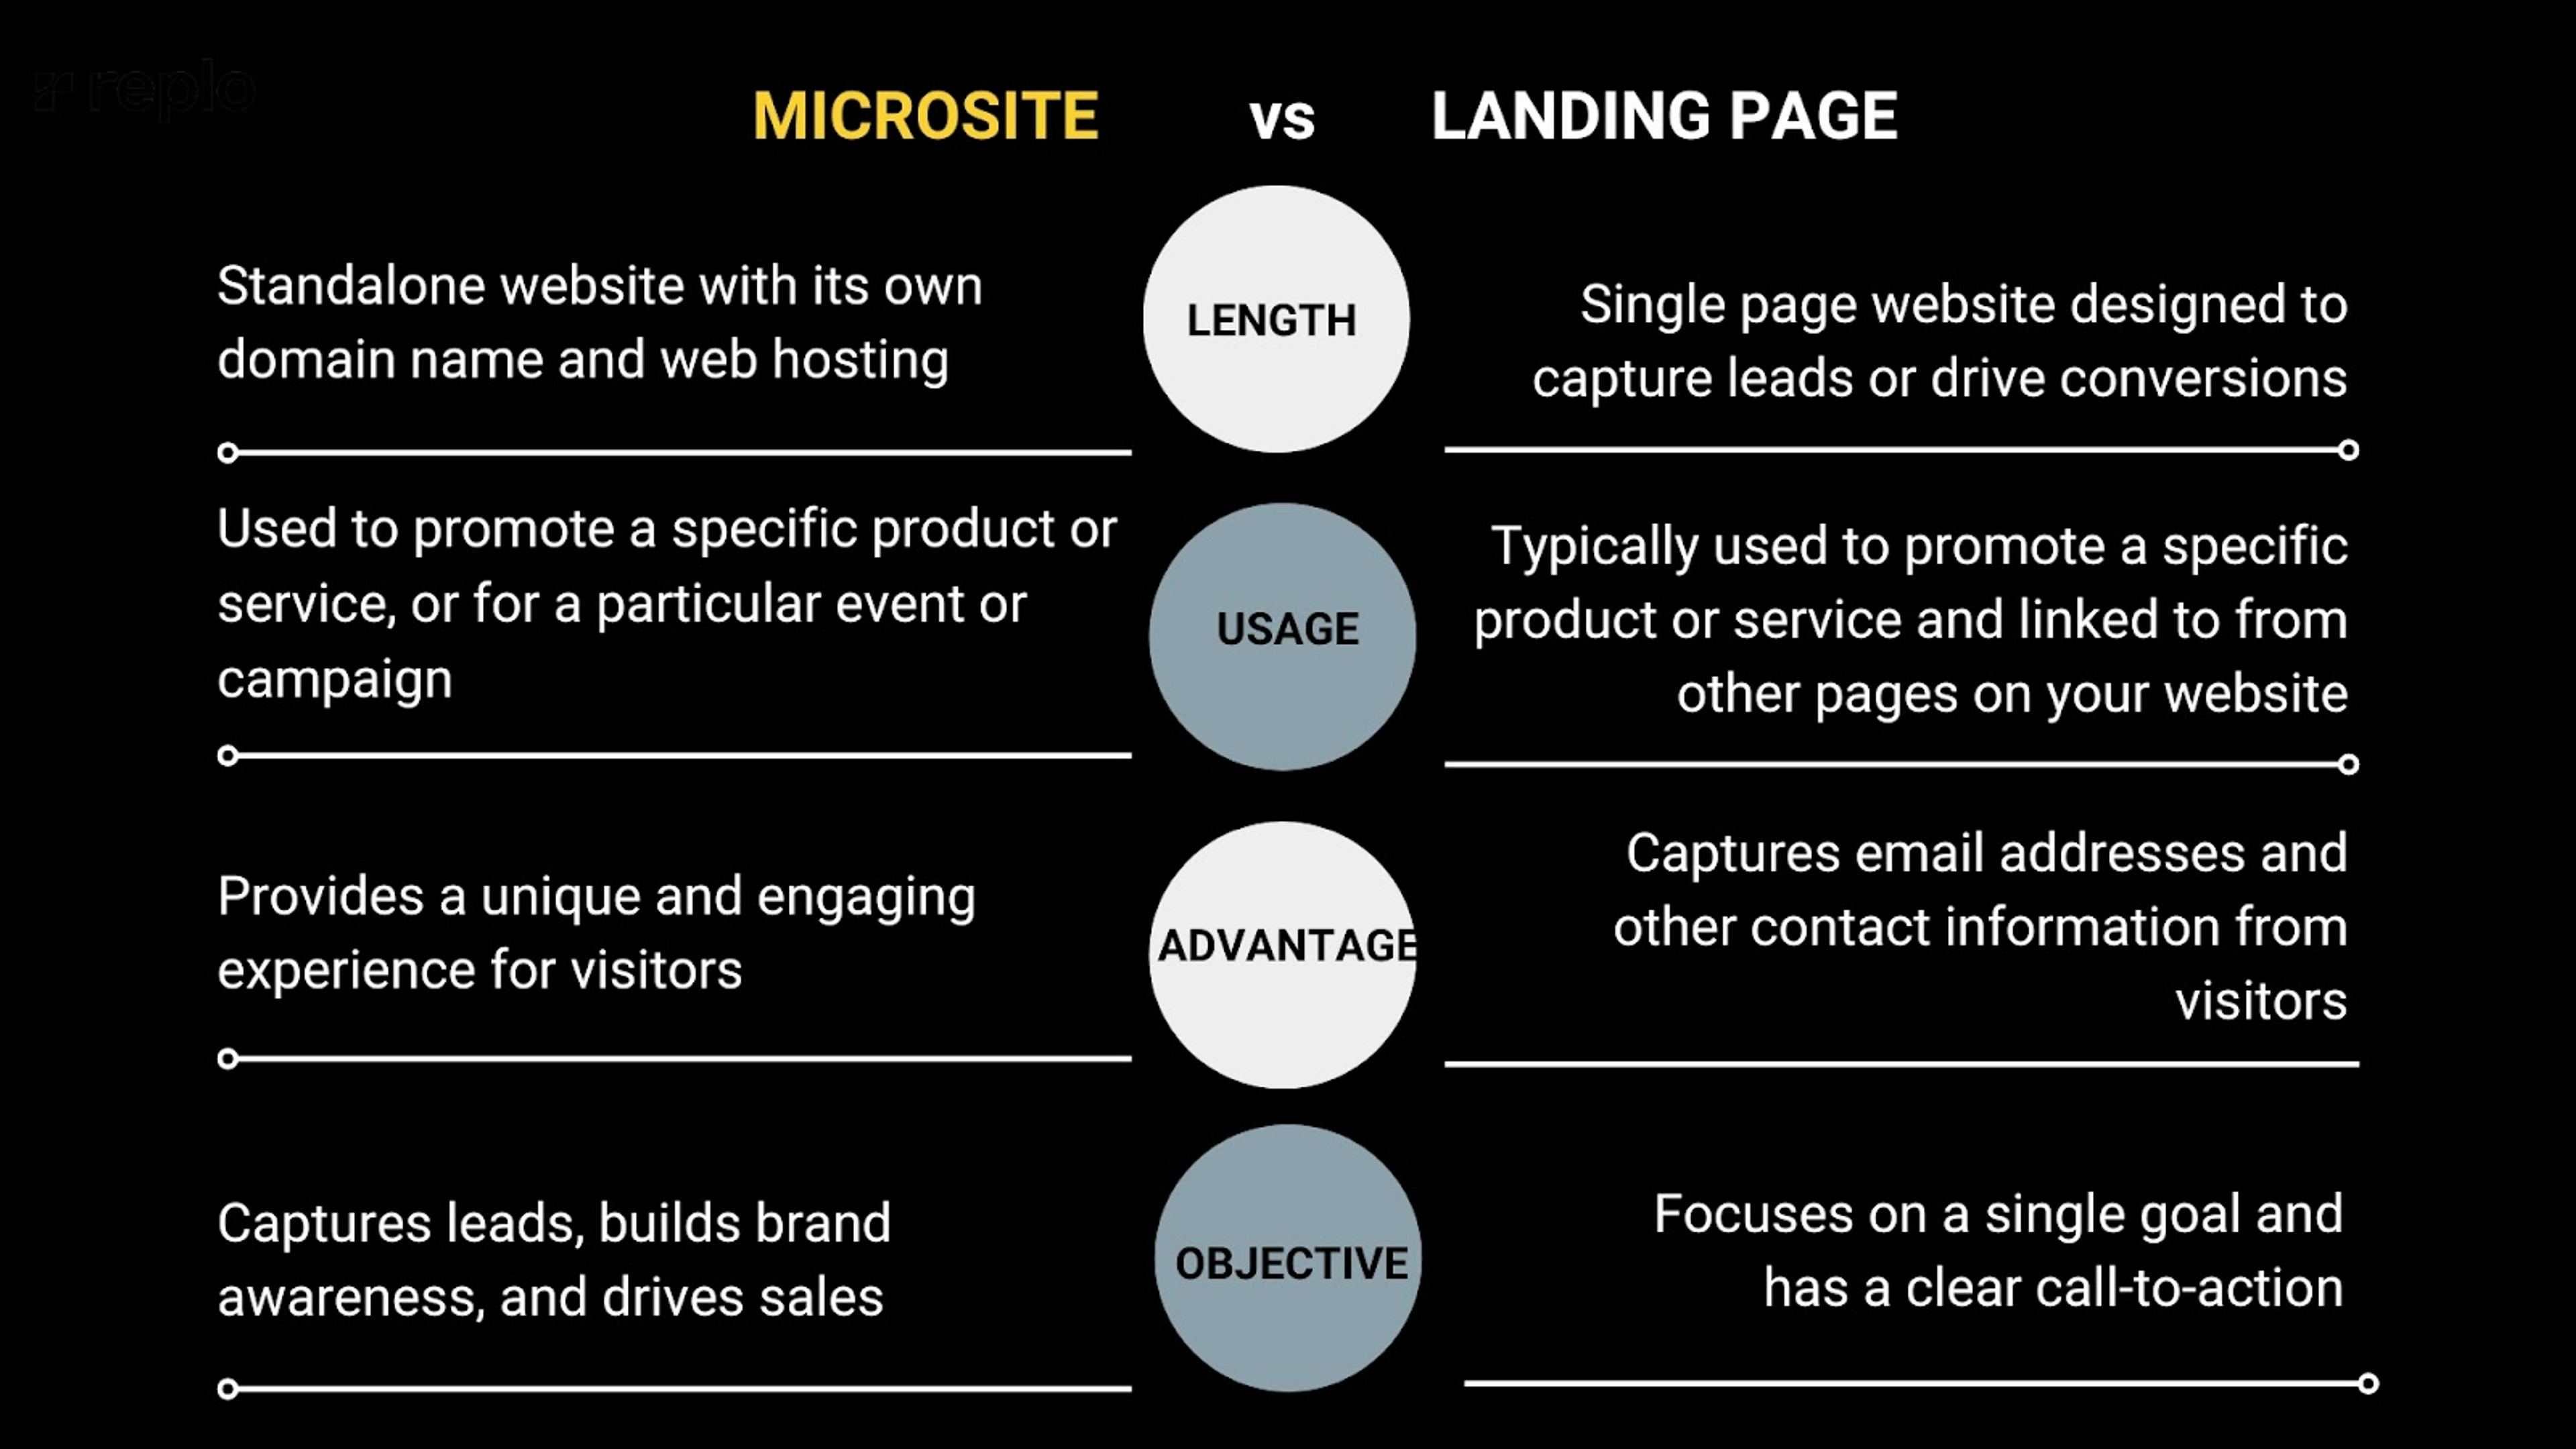 Microsite vs Landing page